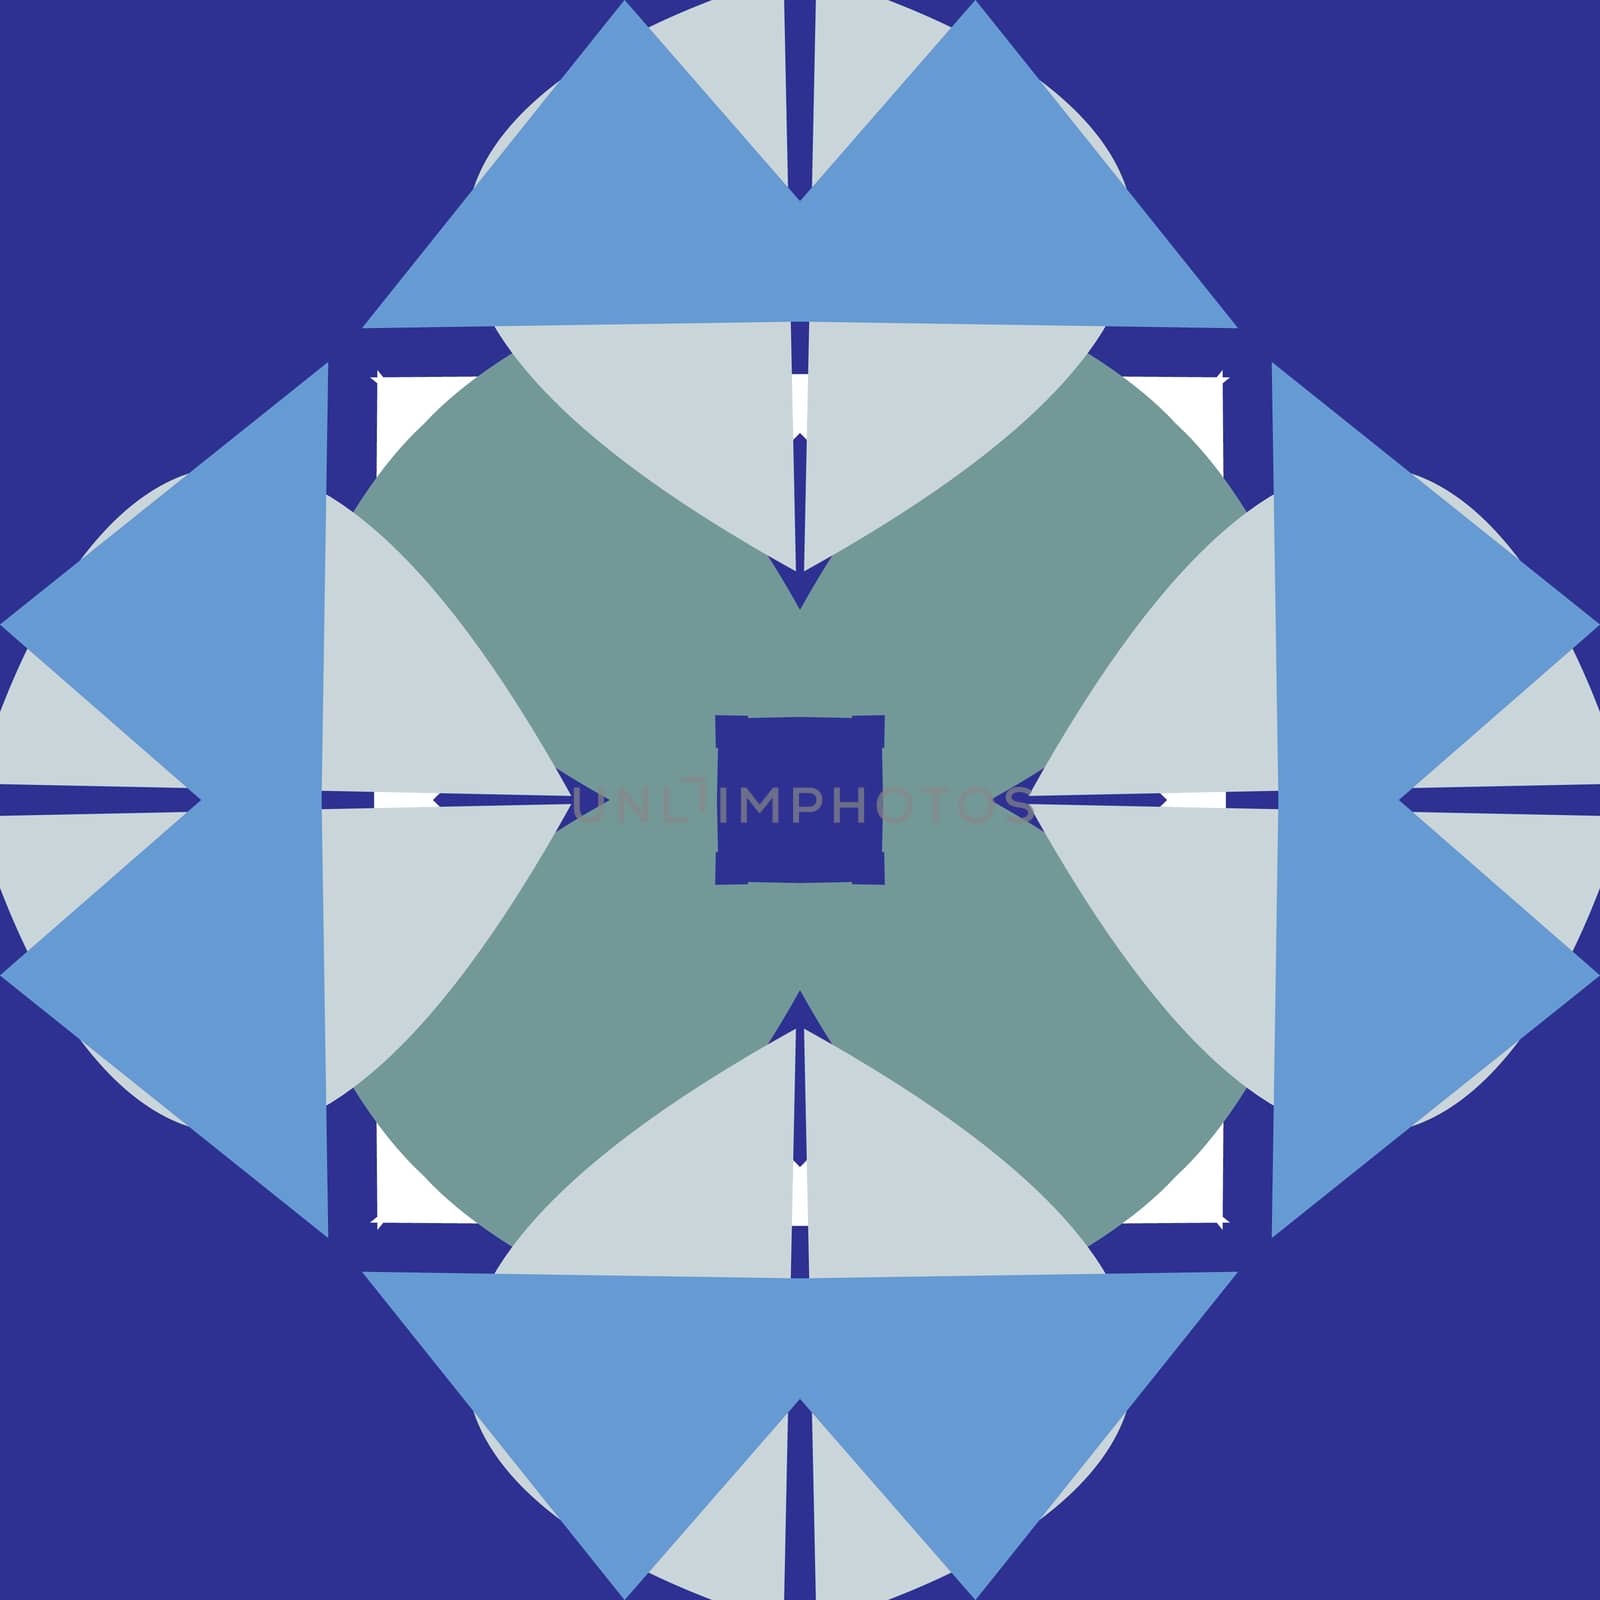 Symmetrical blue and gray tile shape background